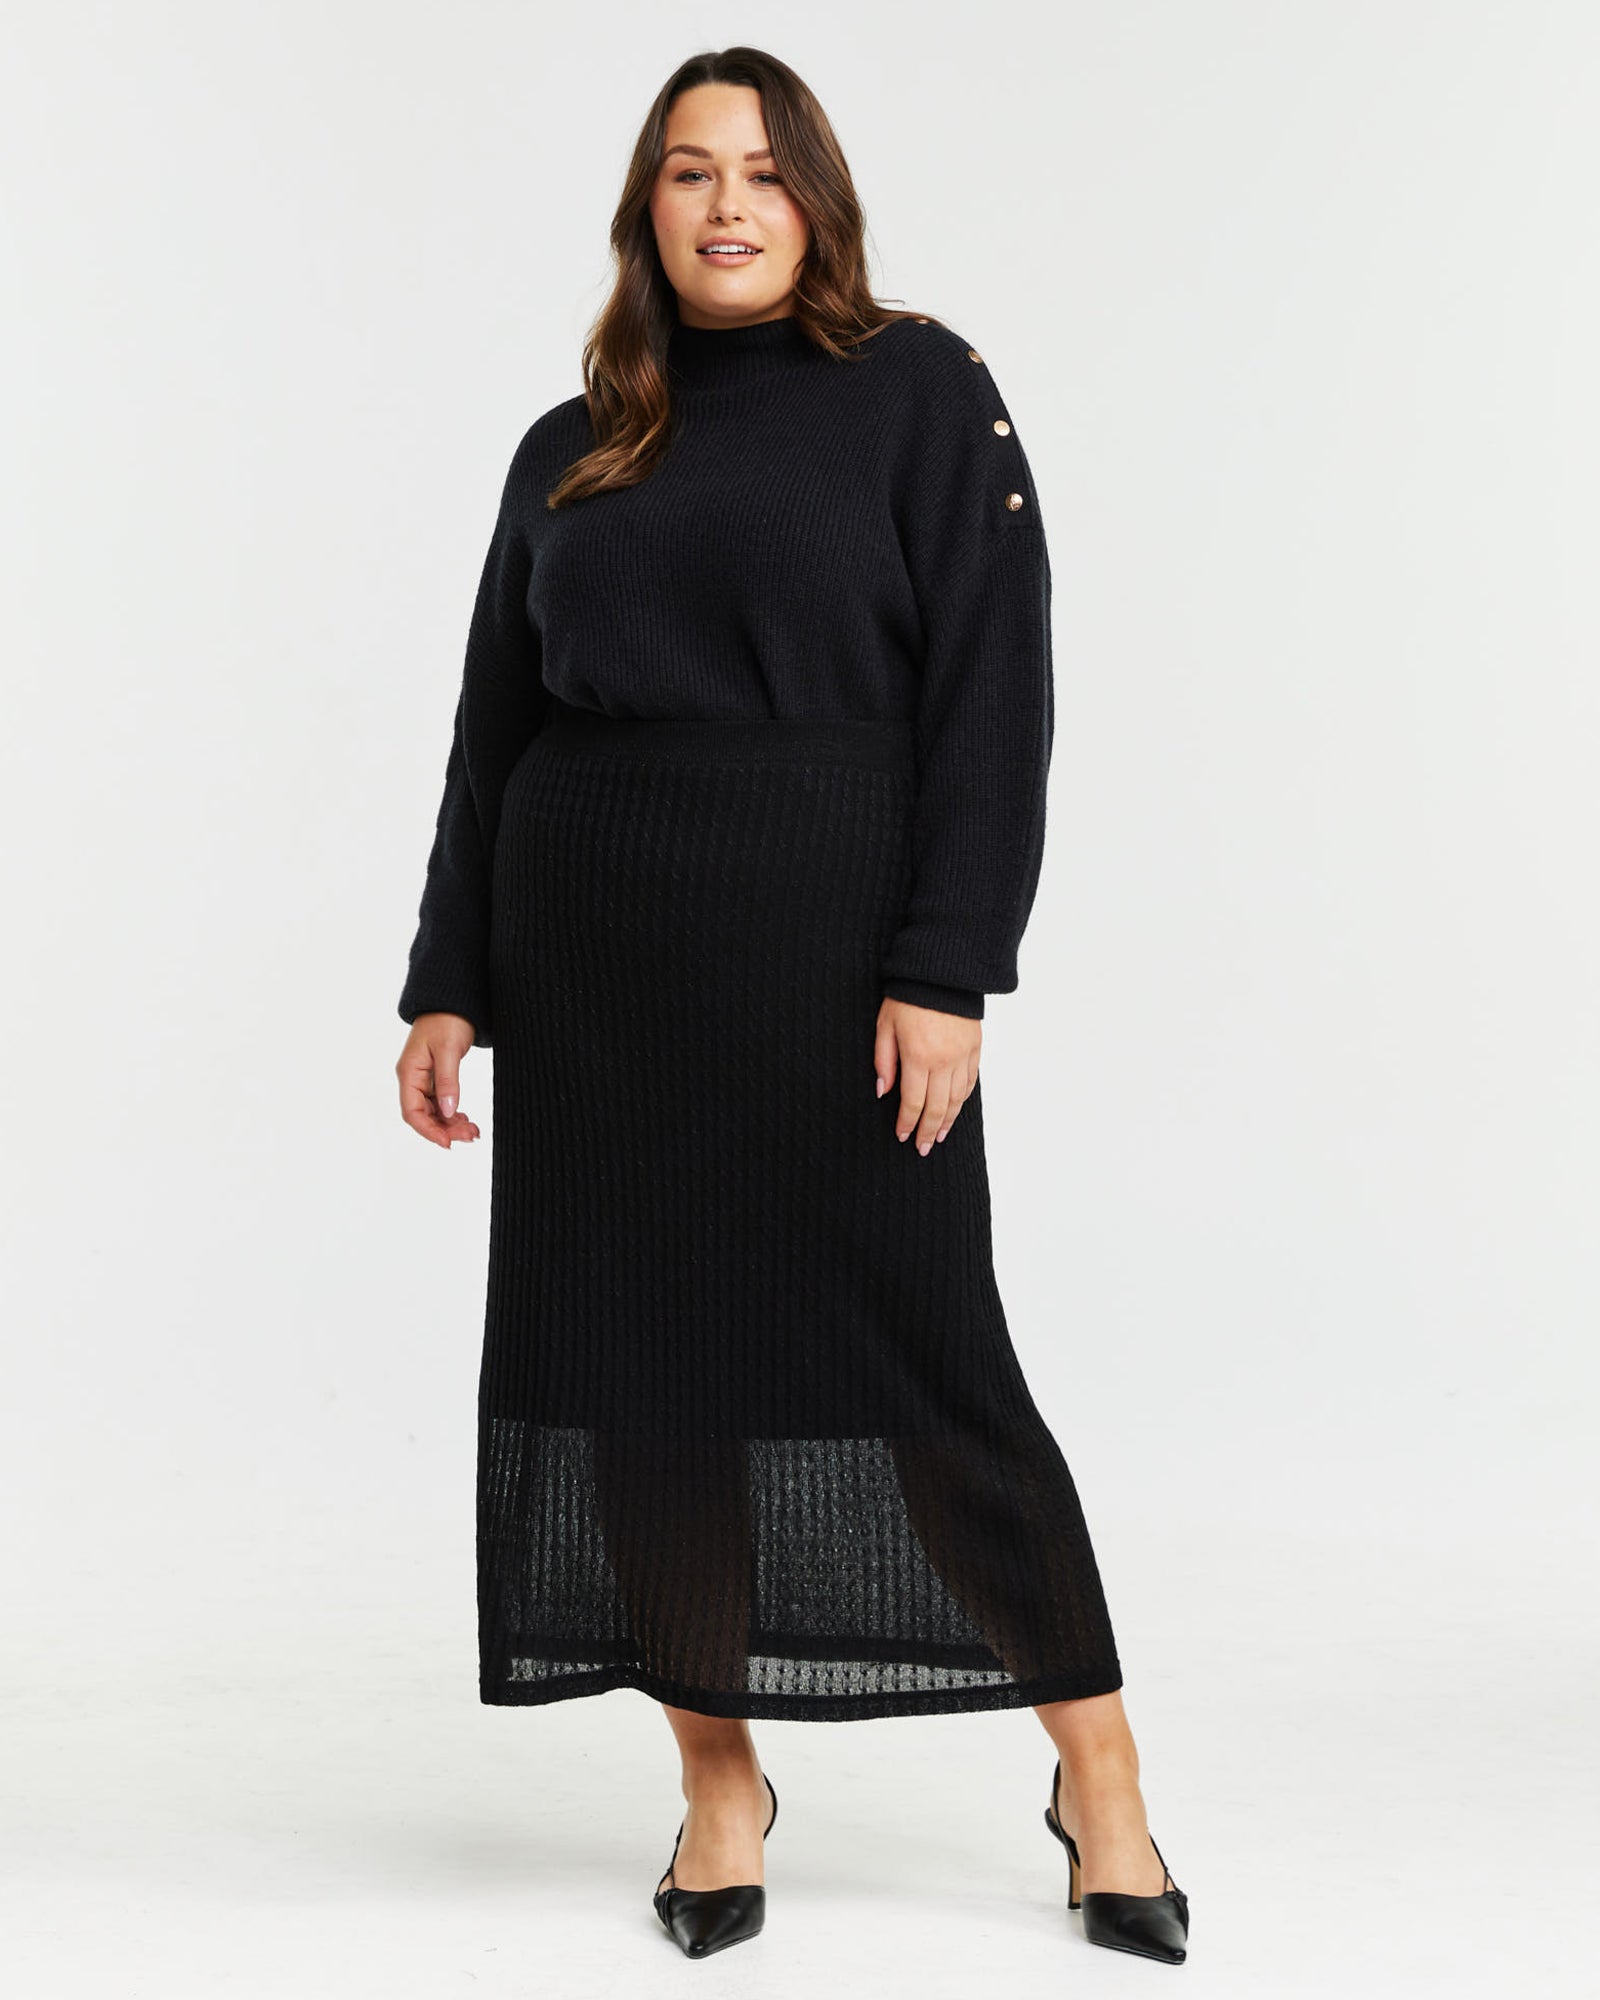 Oxford Metallic Knit Skirt - Black - Estelle Clothing